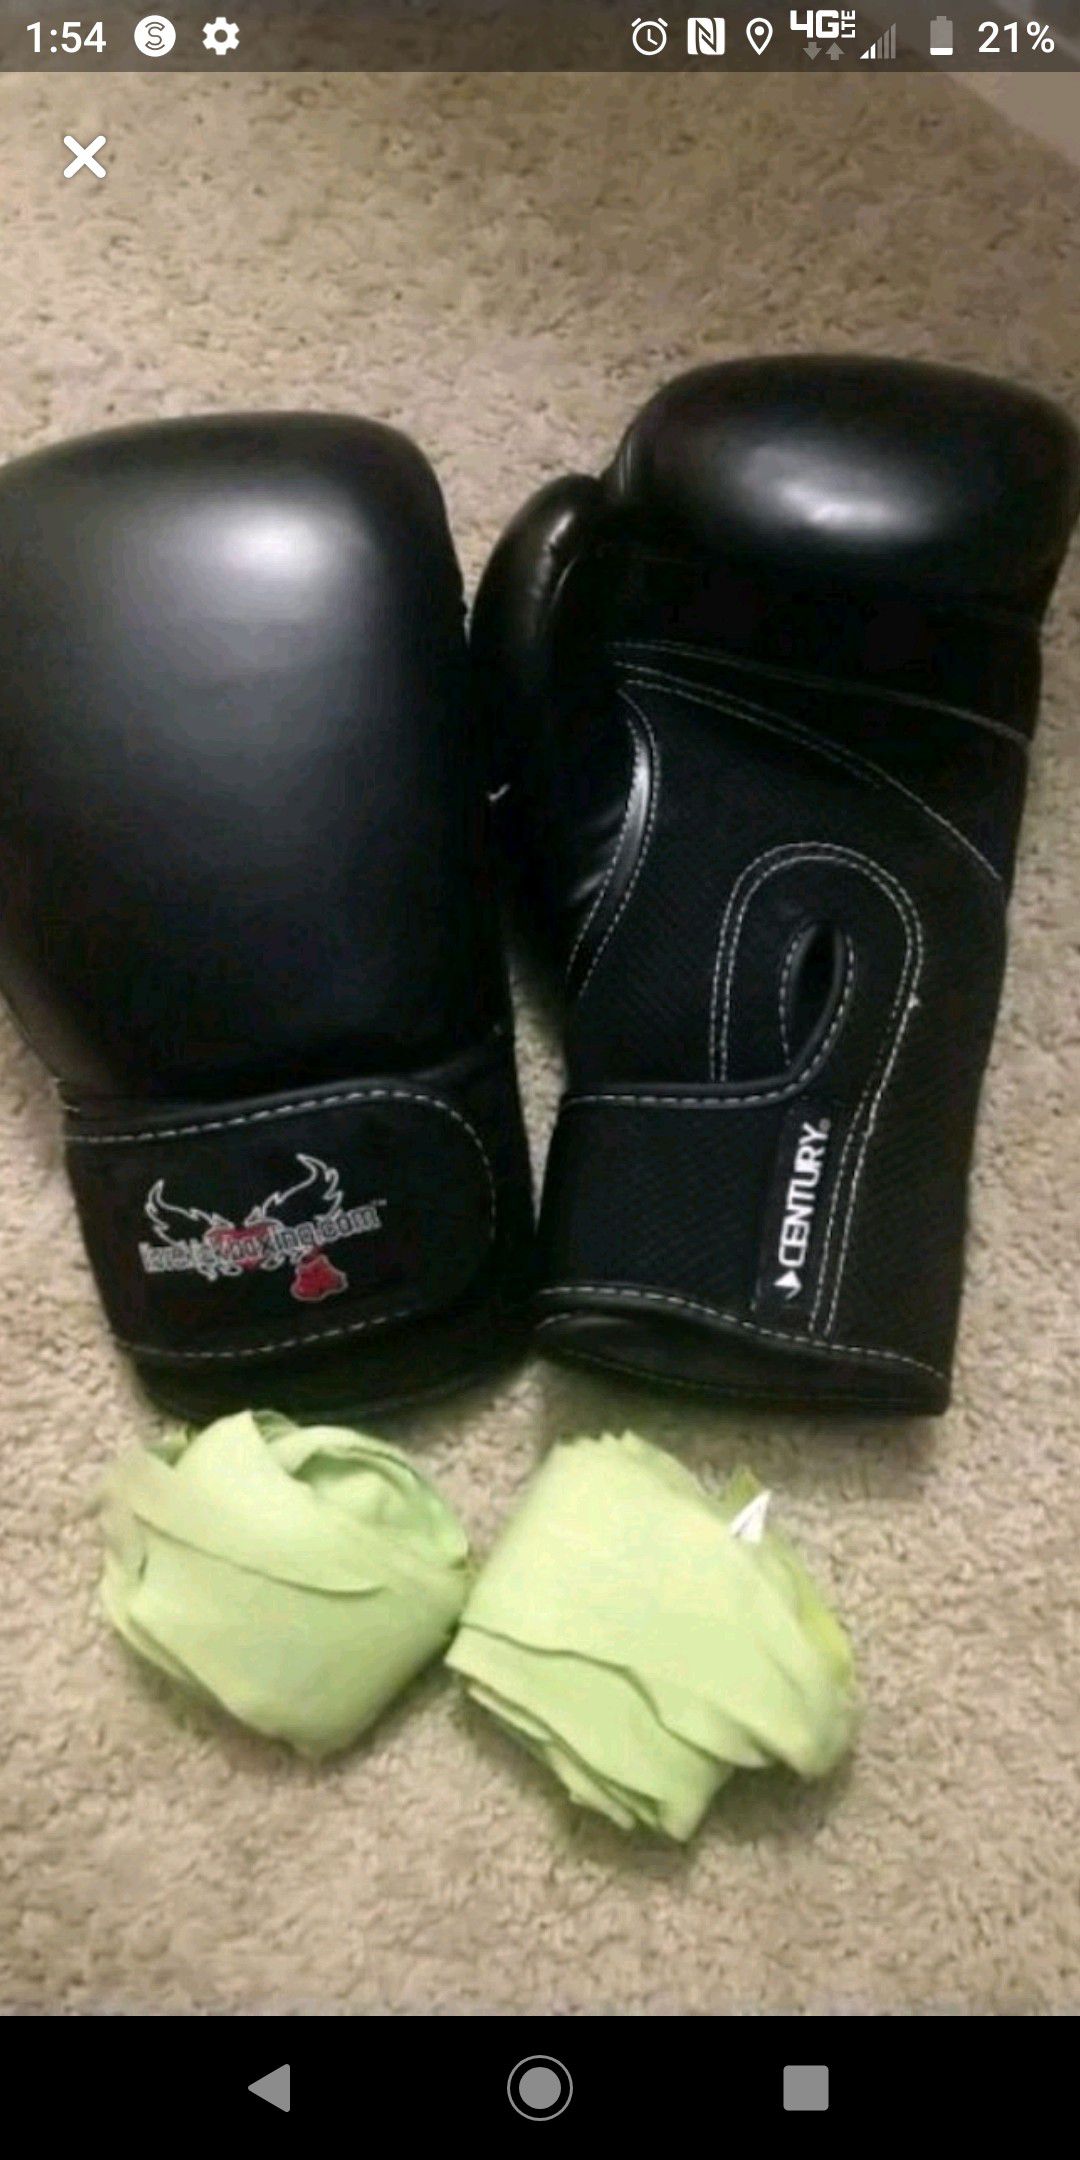 Kickboxing gloves with wrist wraps